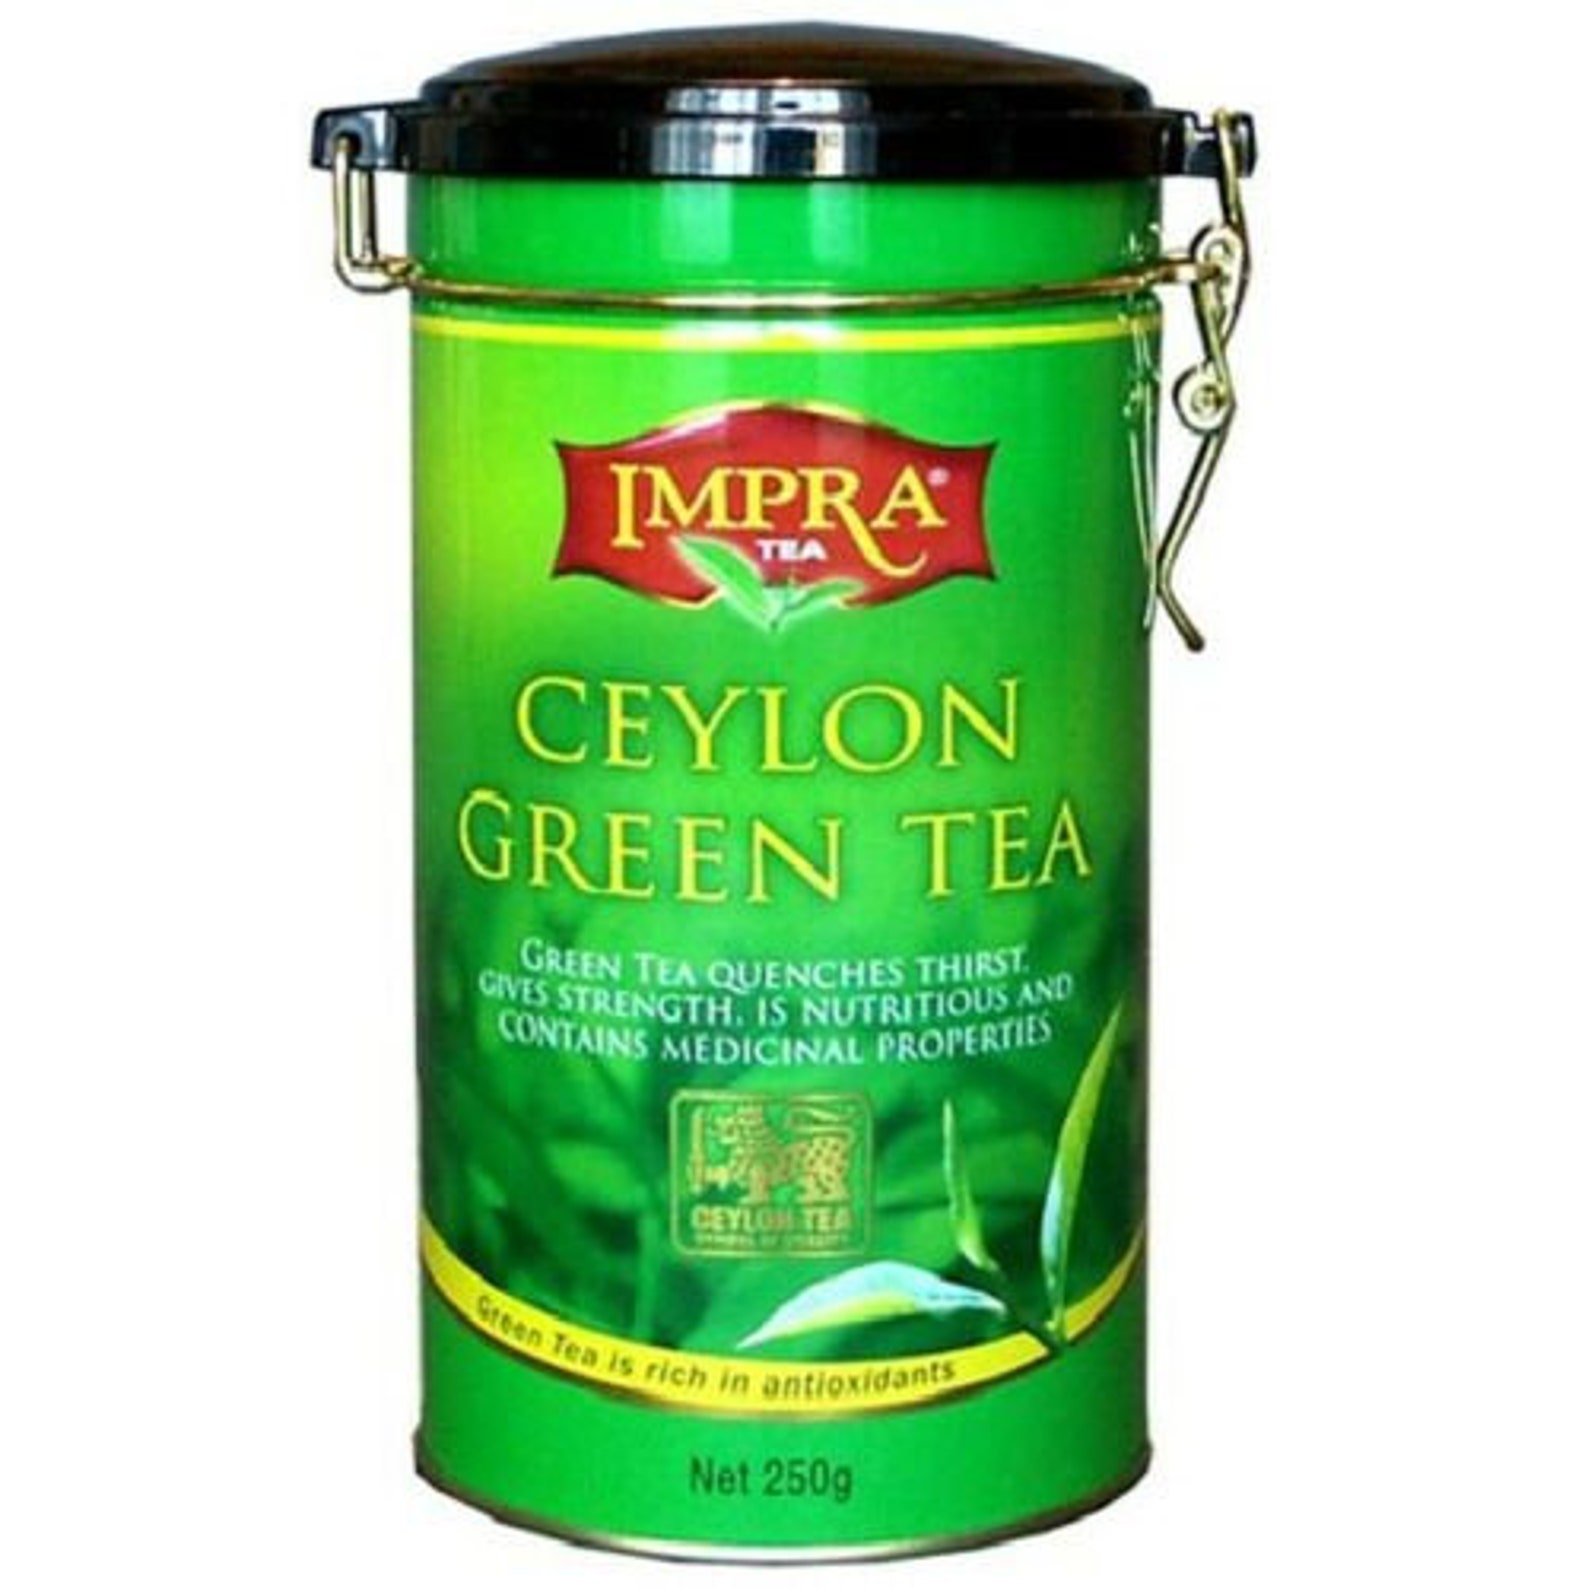 Цейлонский чай из шри ланки. Чай в Шри Ланка Impra. Чай Шри Ланка Impra Tea. Чай Импра Green 200g. Чай Impra Tea Ceylon Green Tea.